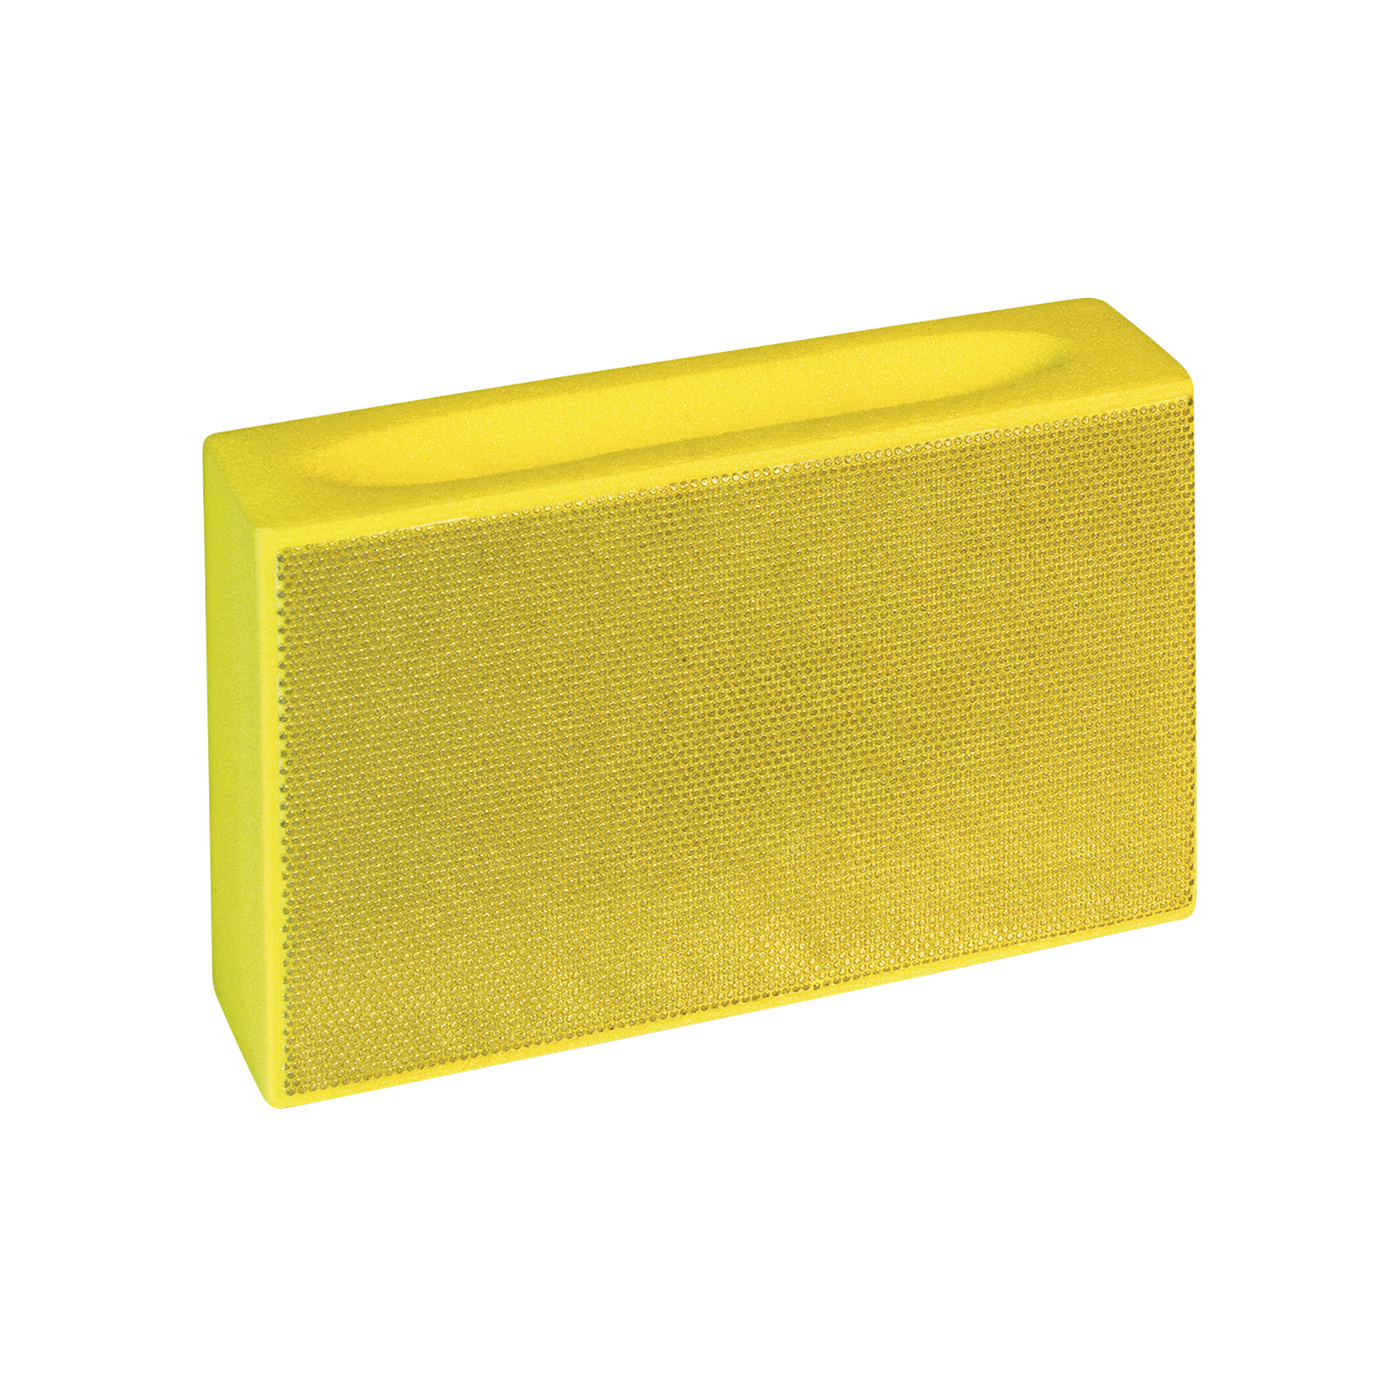 Diapad Grinding Block, Grit 40, Yellow - 1 piece